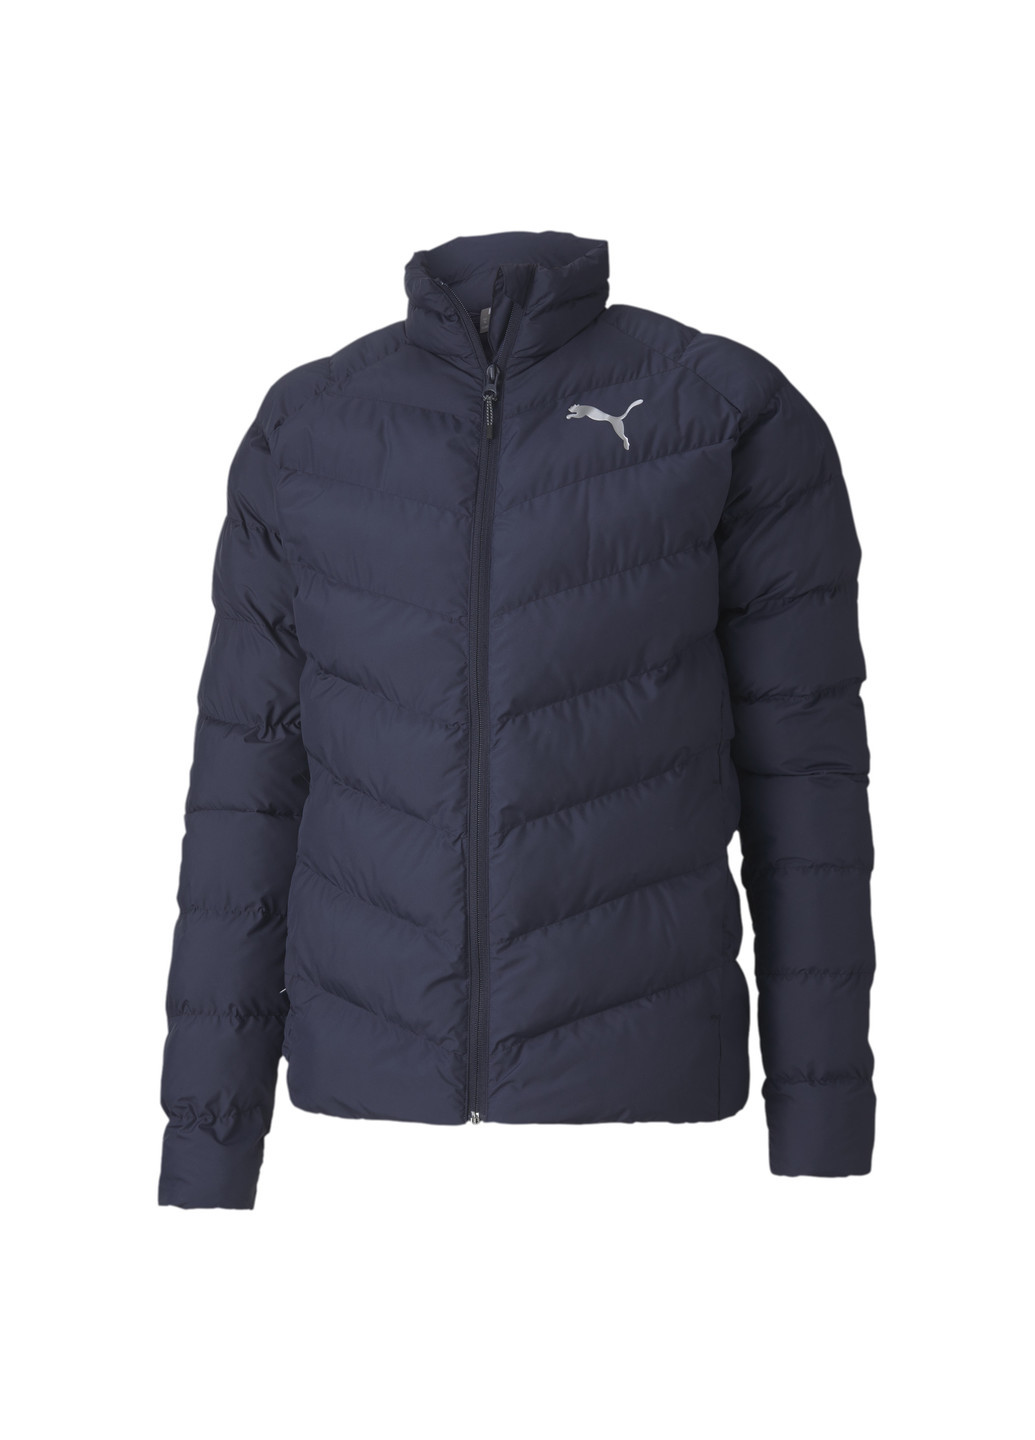 Синяя демисезонная куртка warmcell lightweight jacket Puma